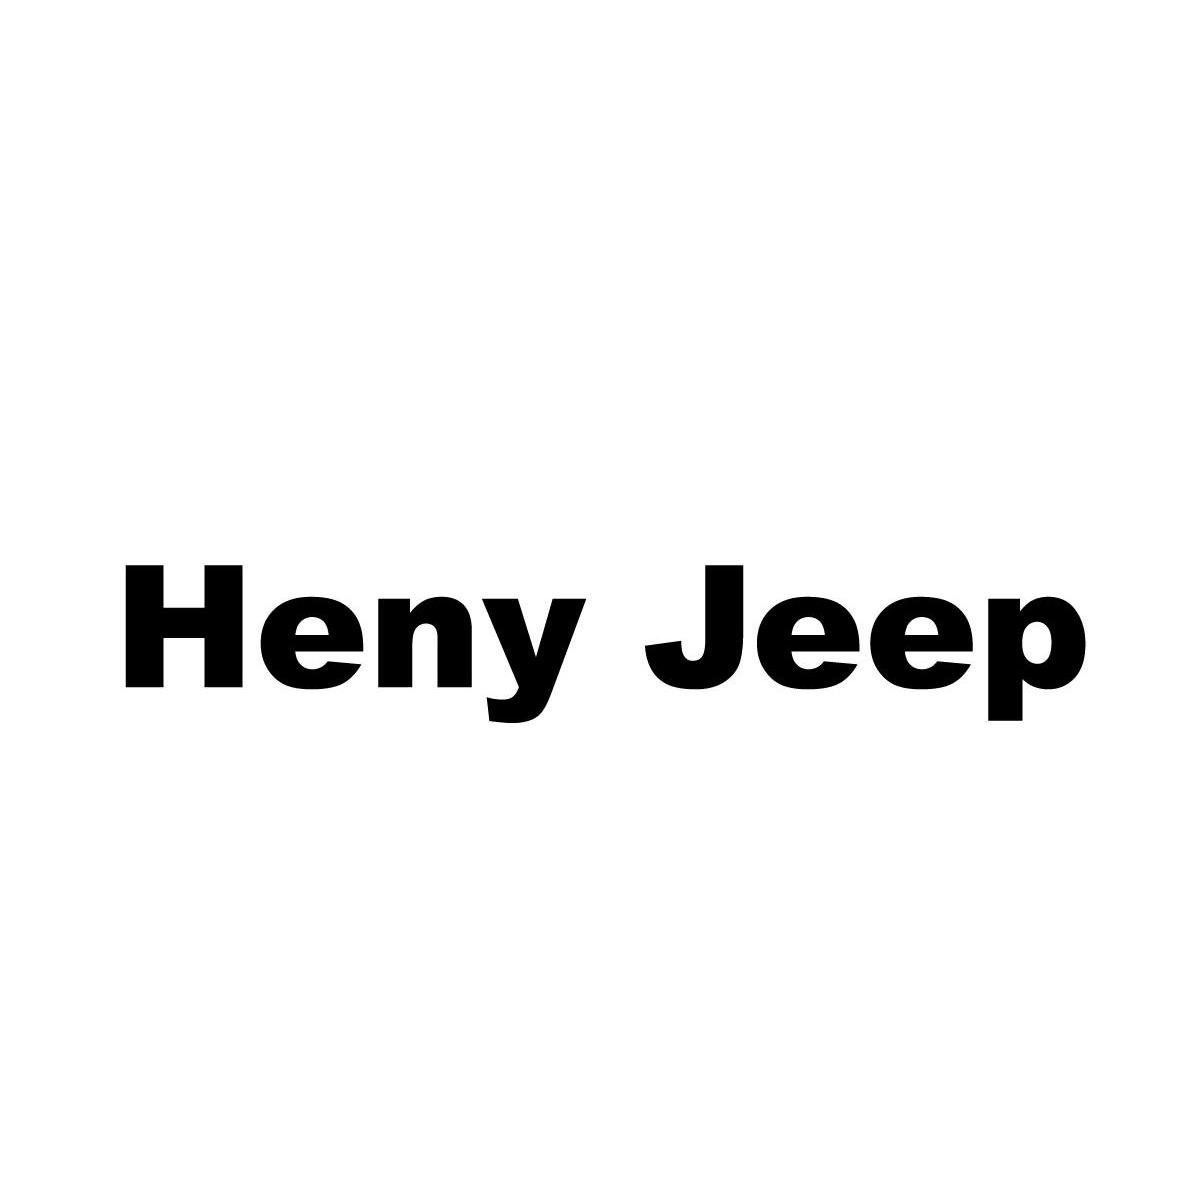 heny jeep商标无效